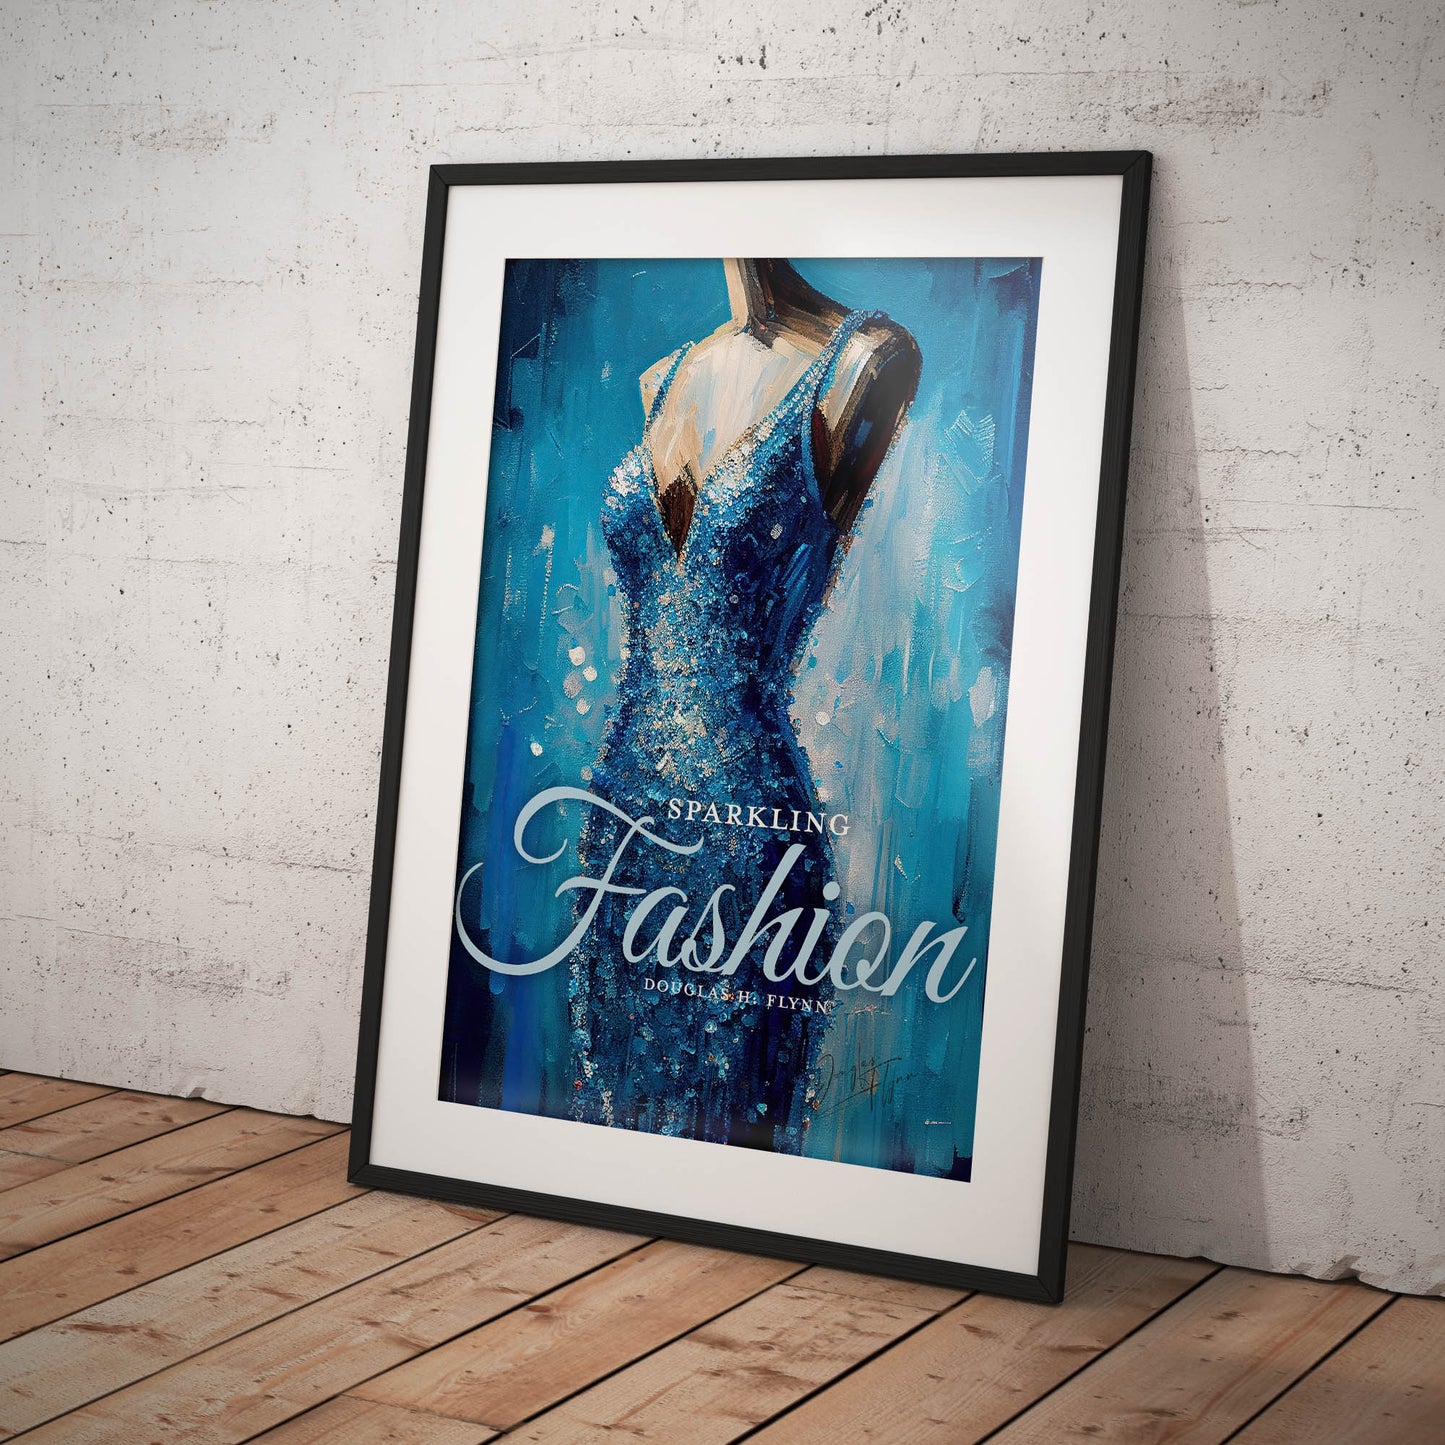 »Sparkling Fashion« merch poster